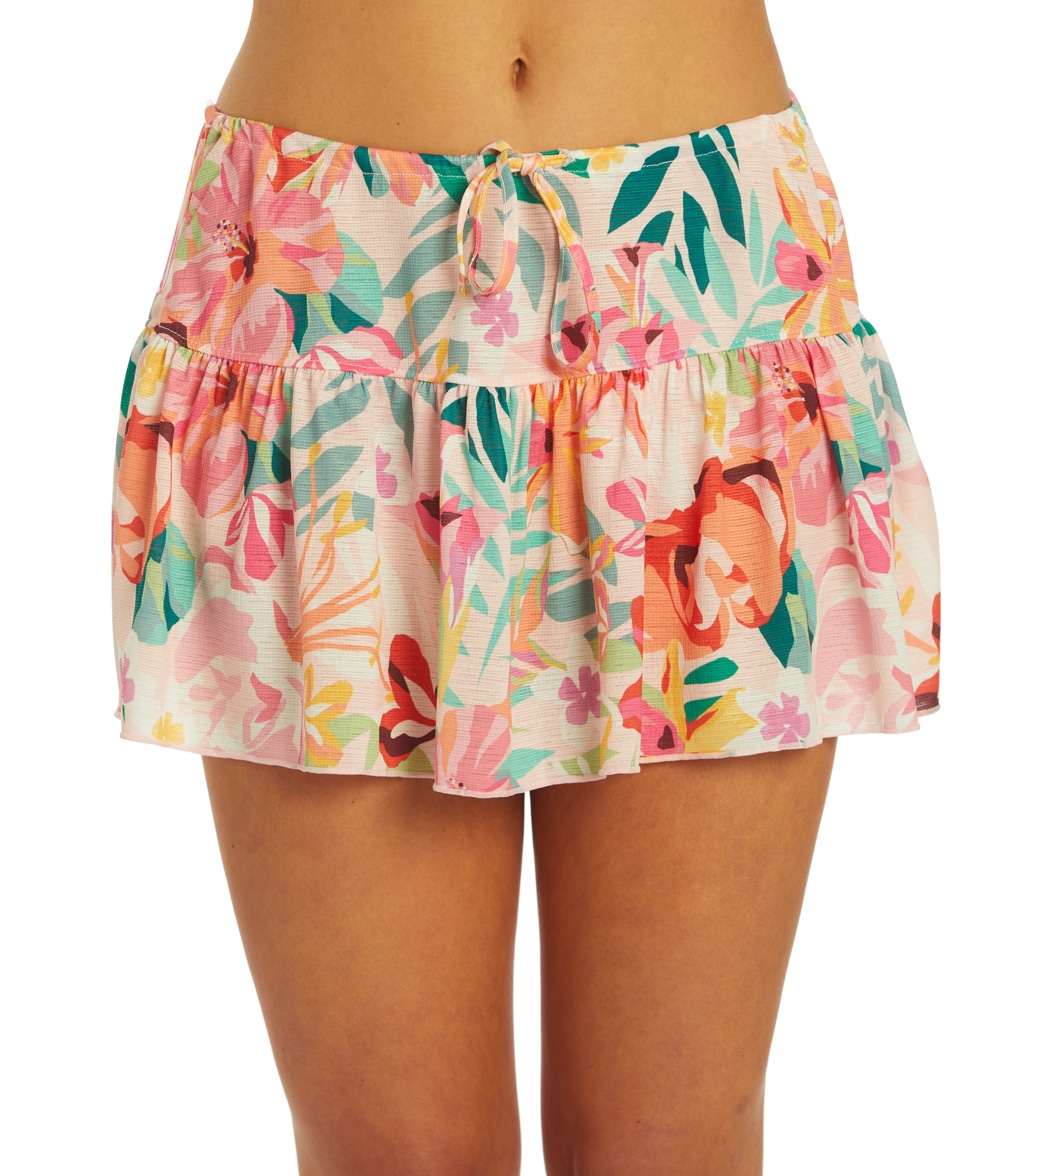 Hurley Women's Floral Pop Mini Skirt - Multi Large - Swimoutlet.com